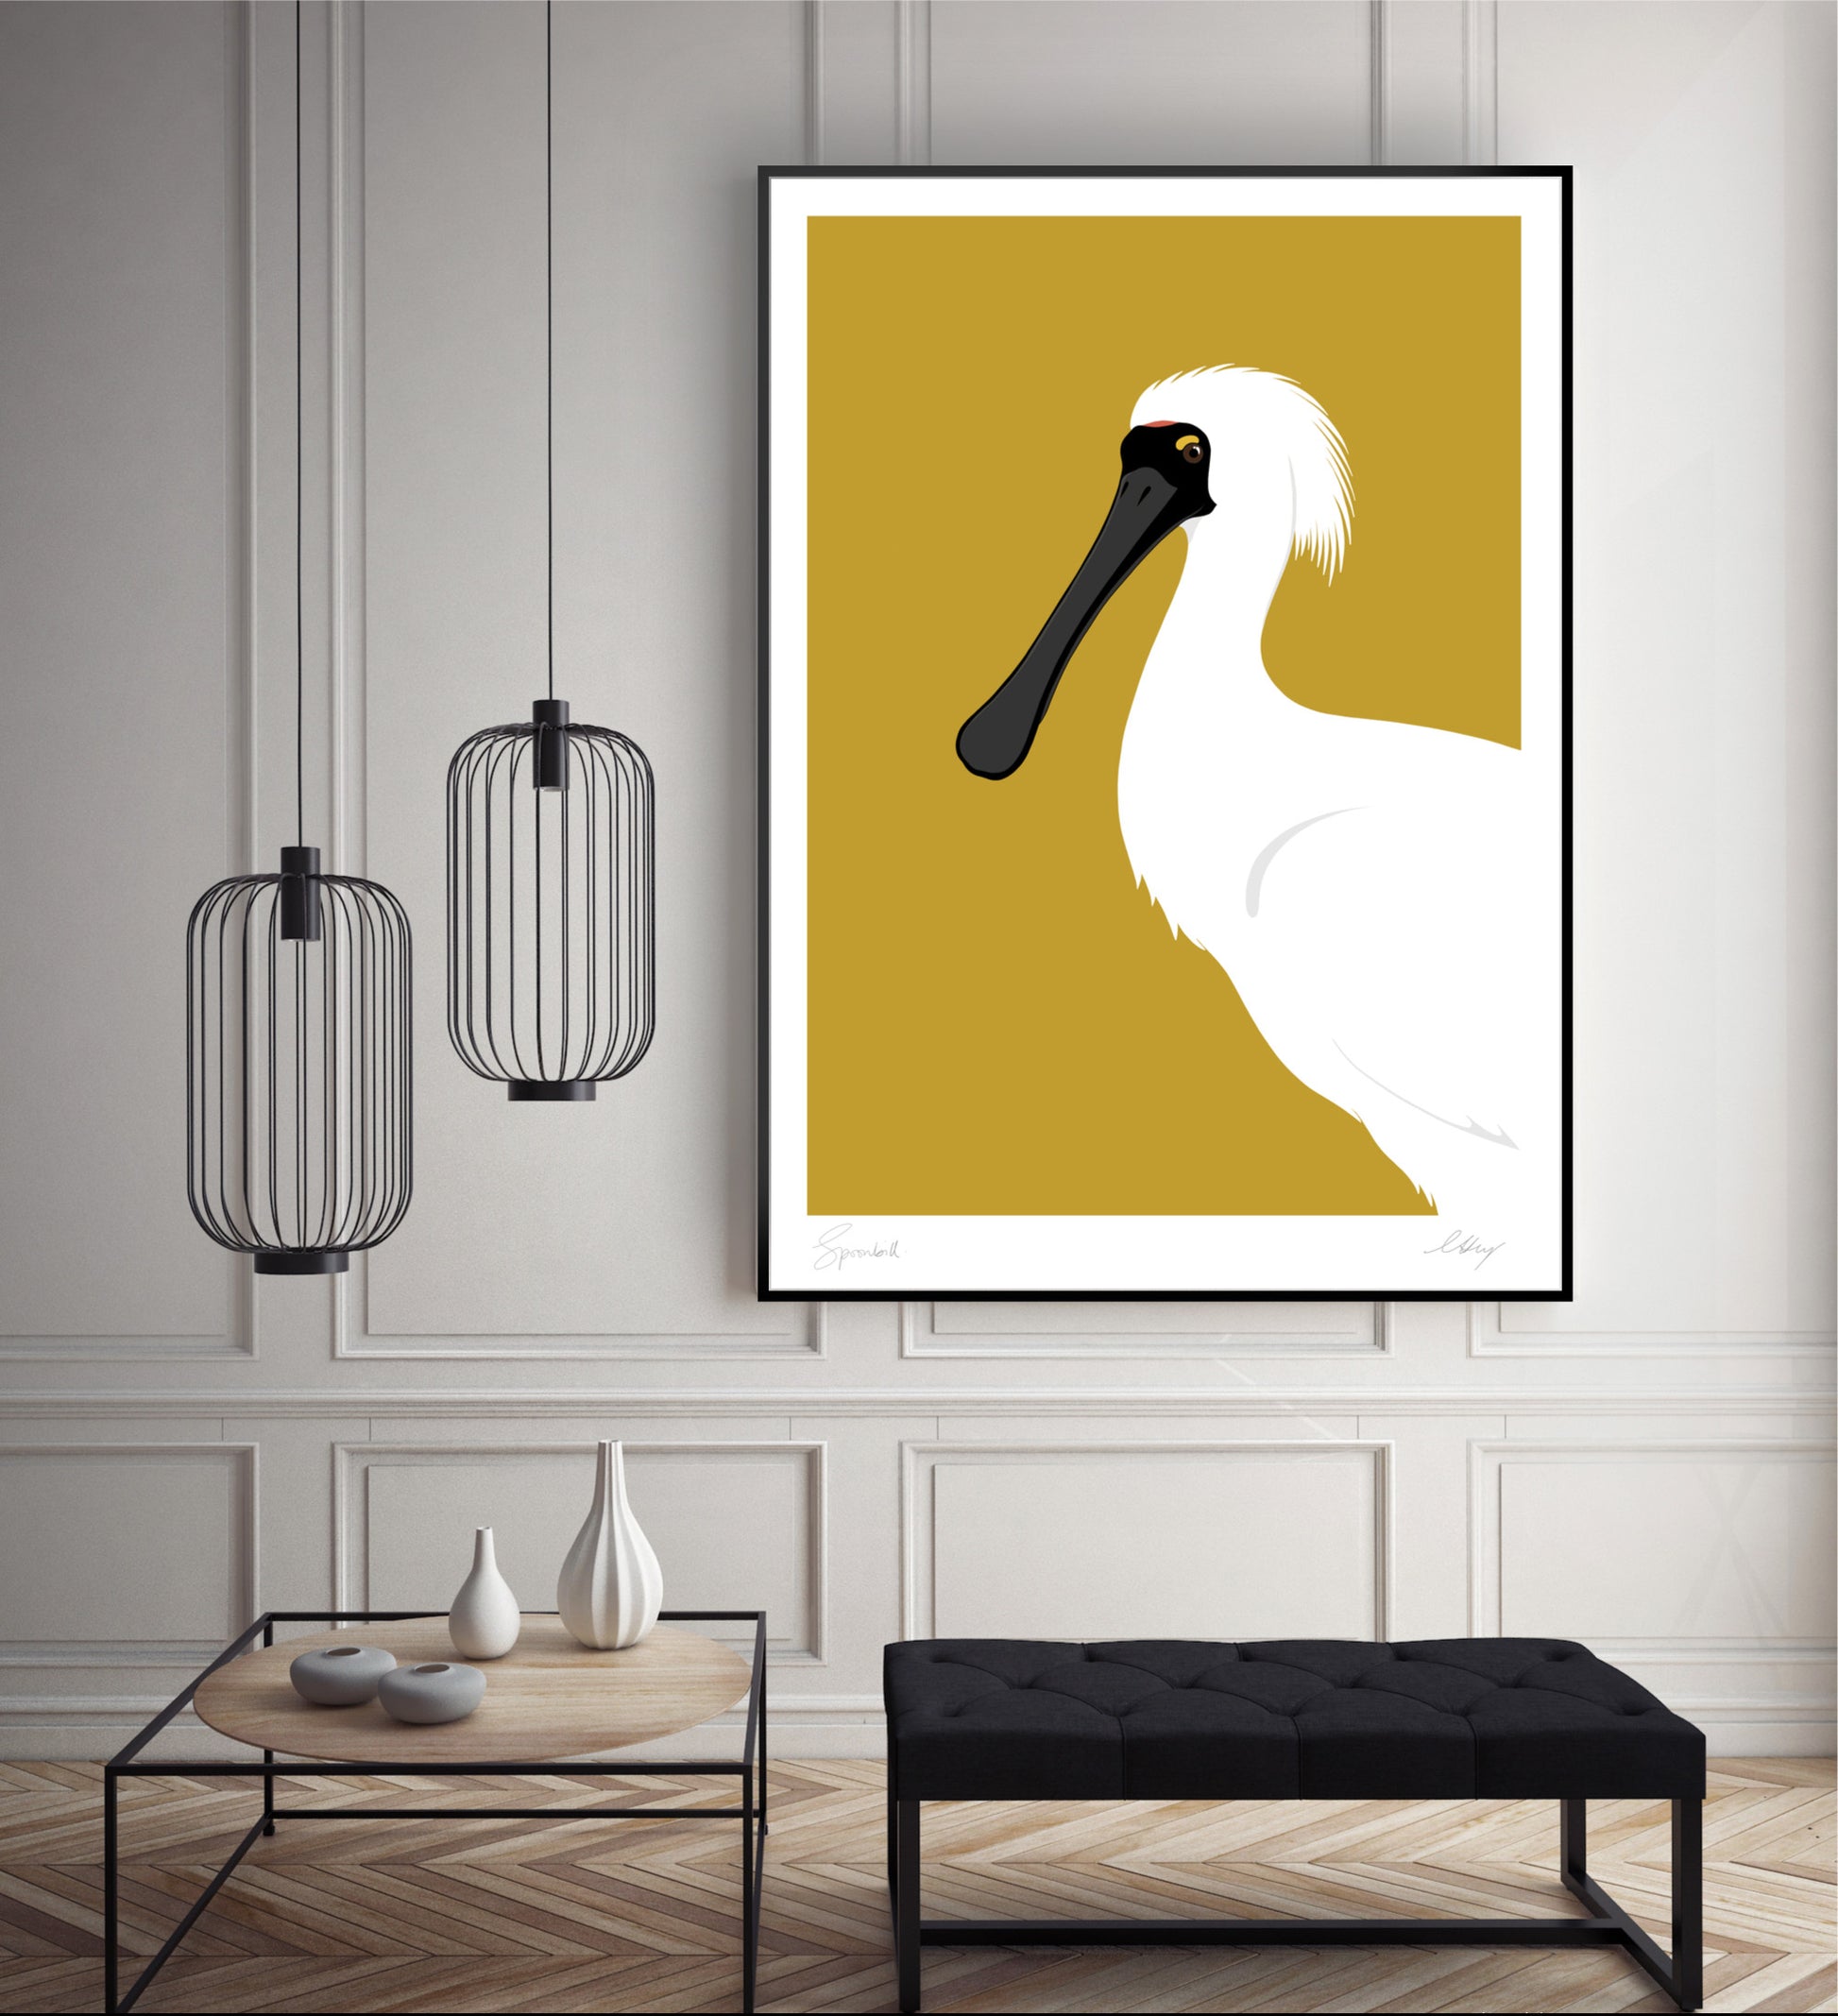 Framed art print of the Spoonbill bird of Australasia by artist Hansby Design, New Zealand 